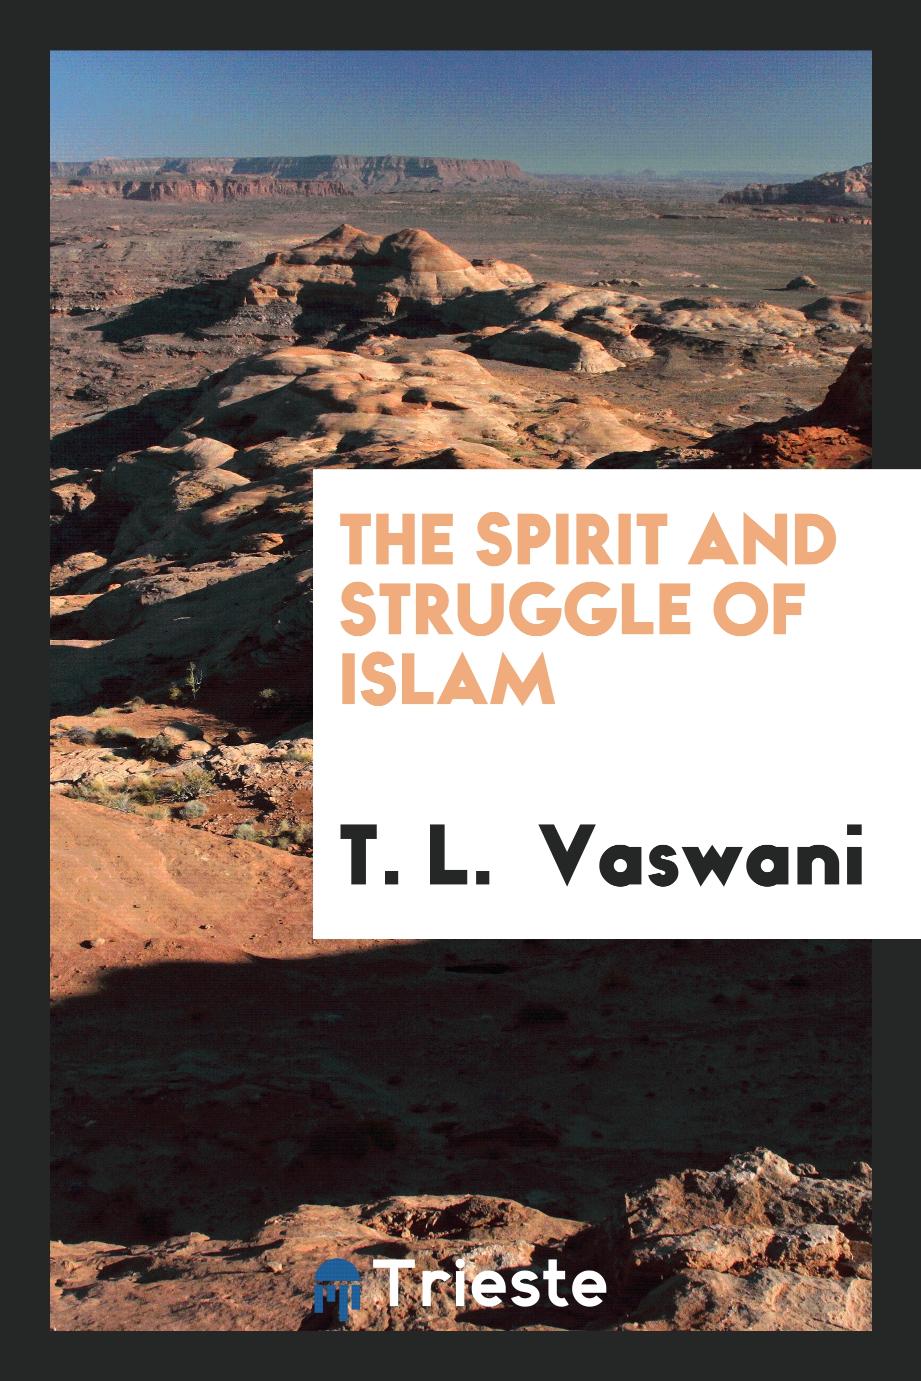 The spirit and struggle of Islam